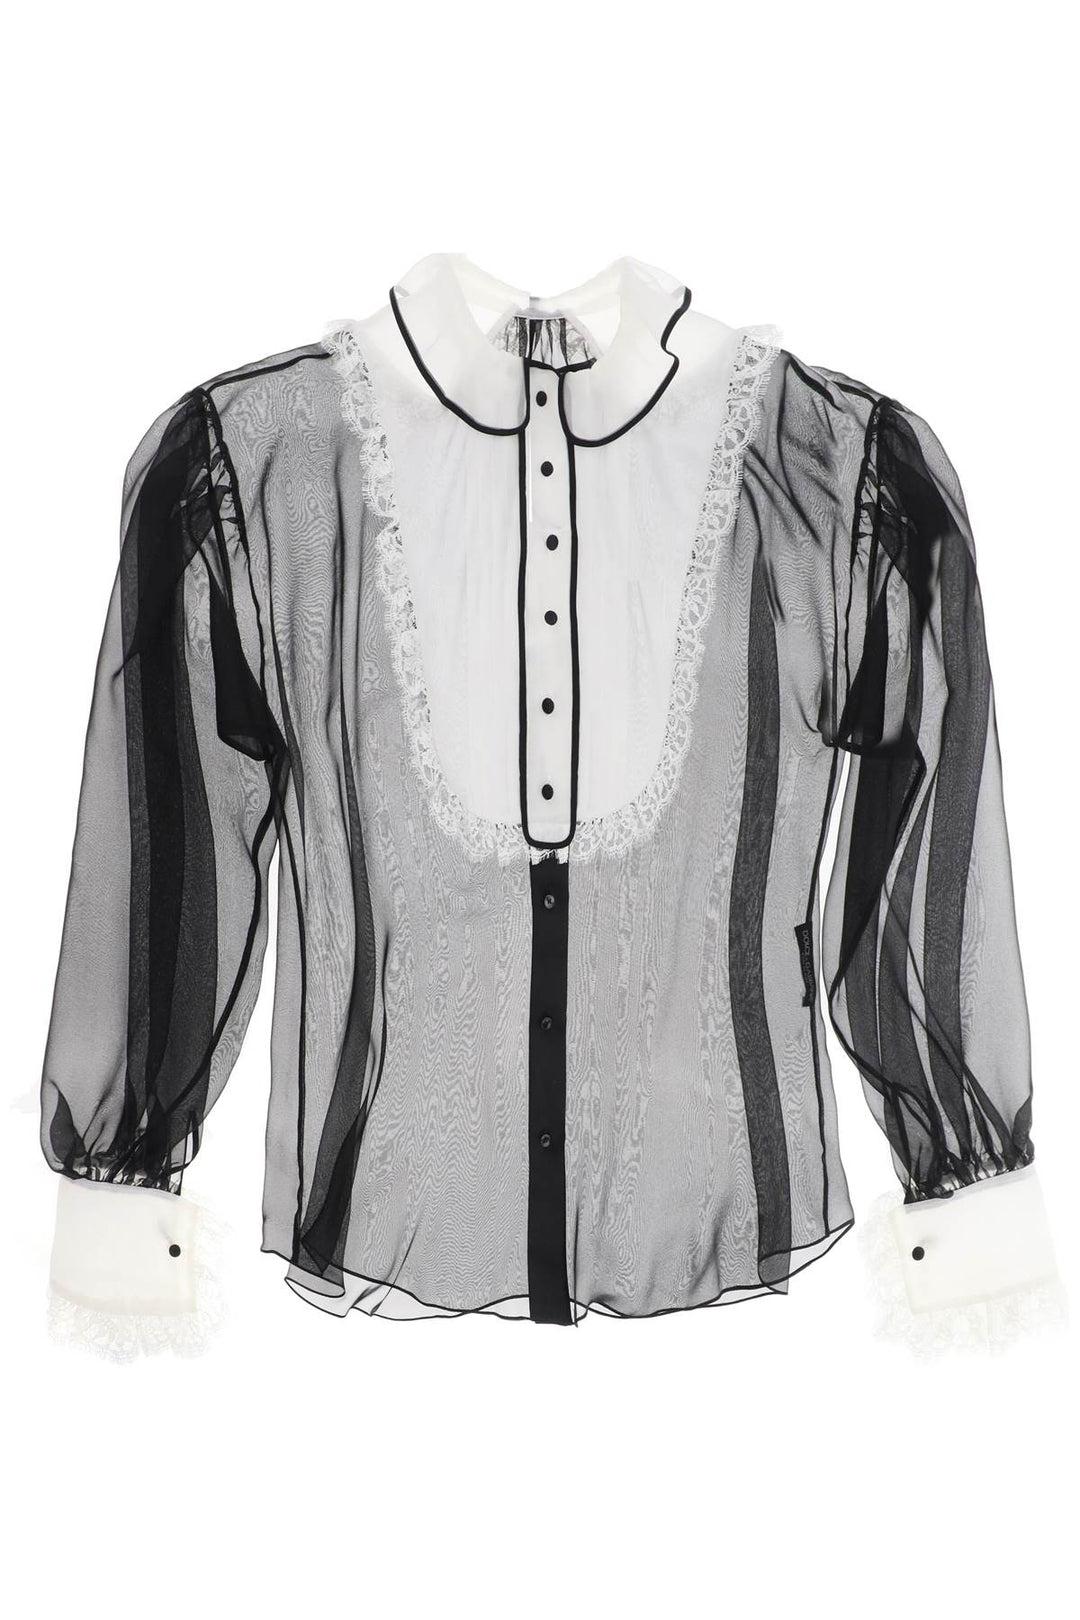 Dolce & gabbana chiffon blouse with plastr-0